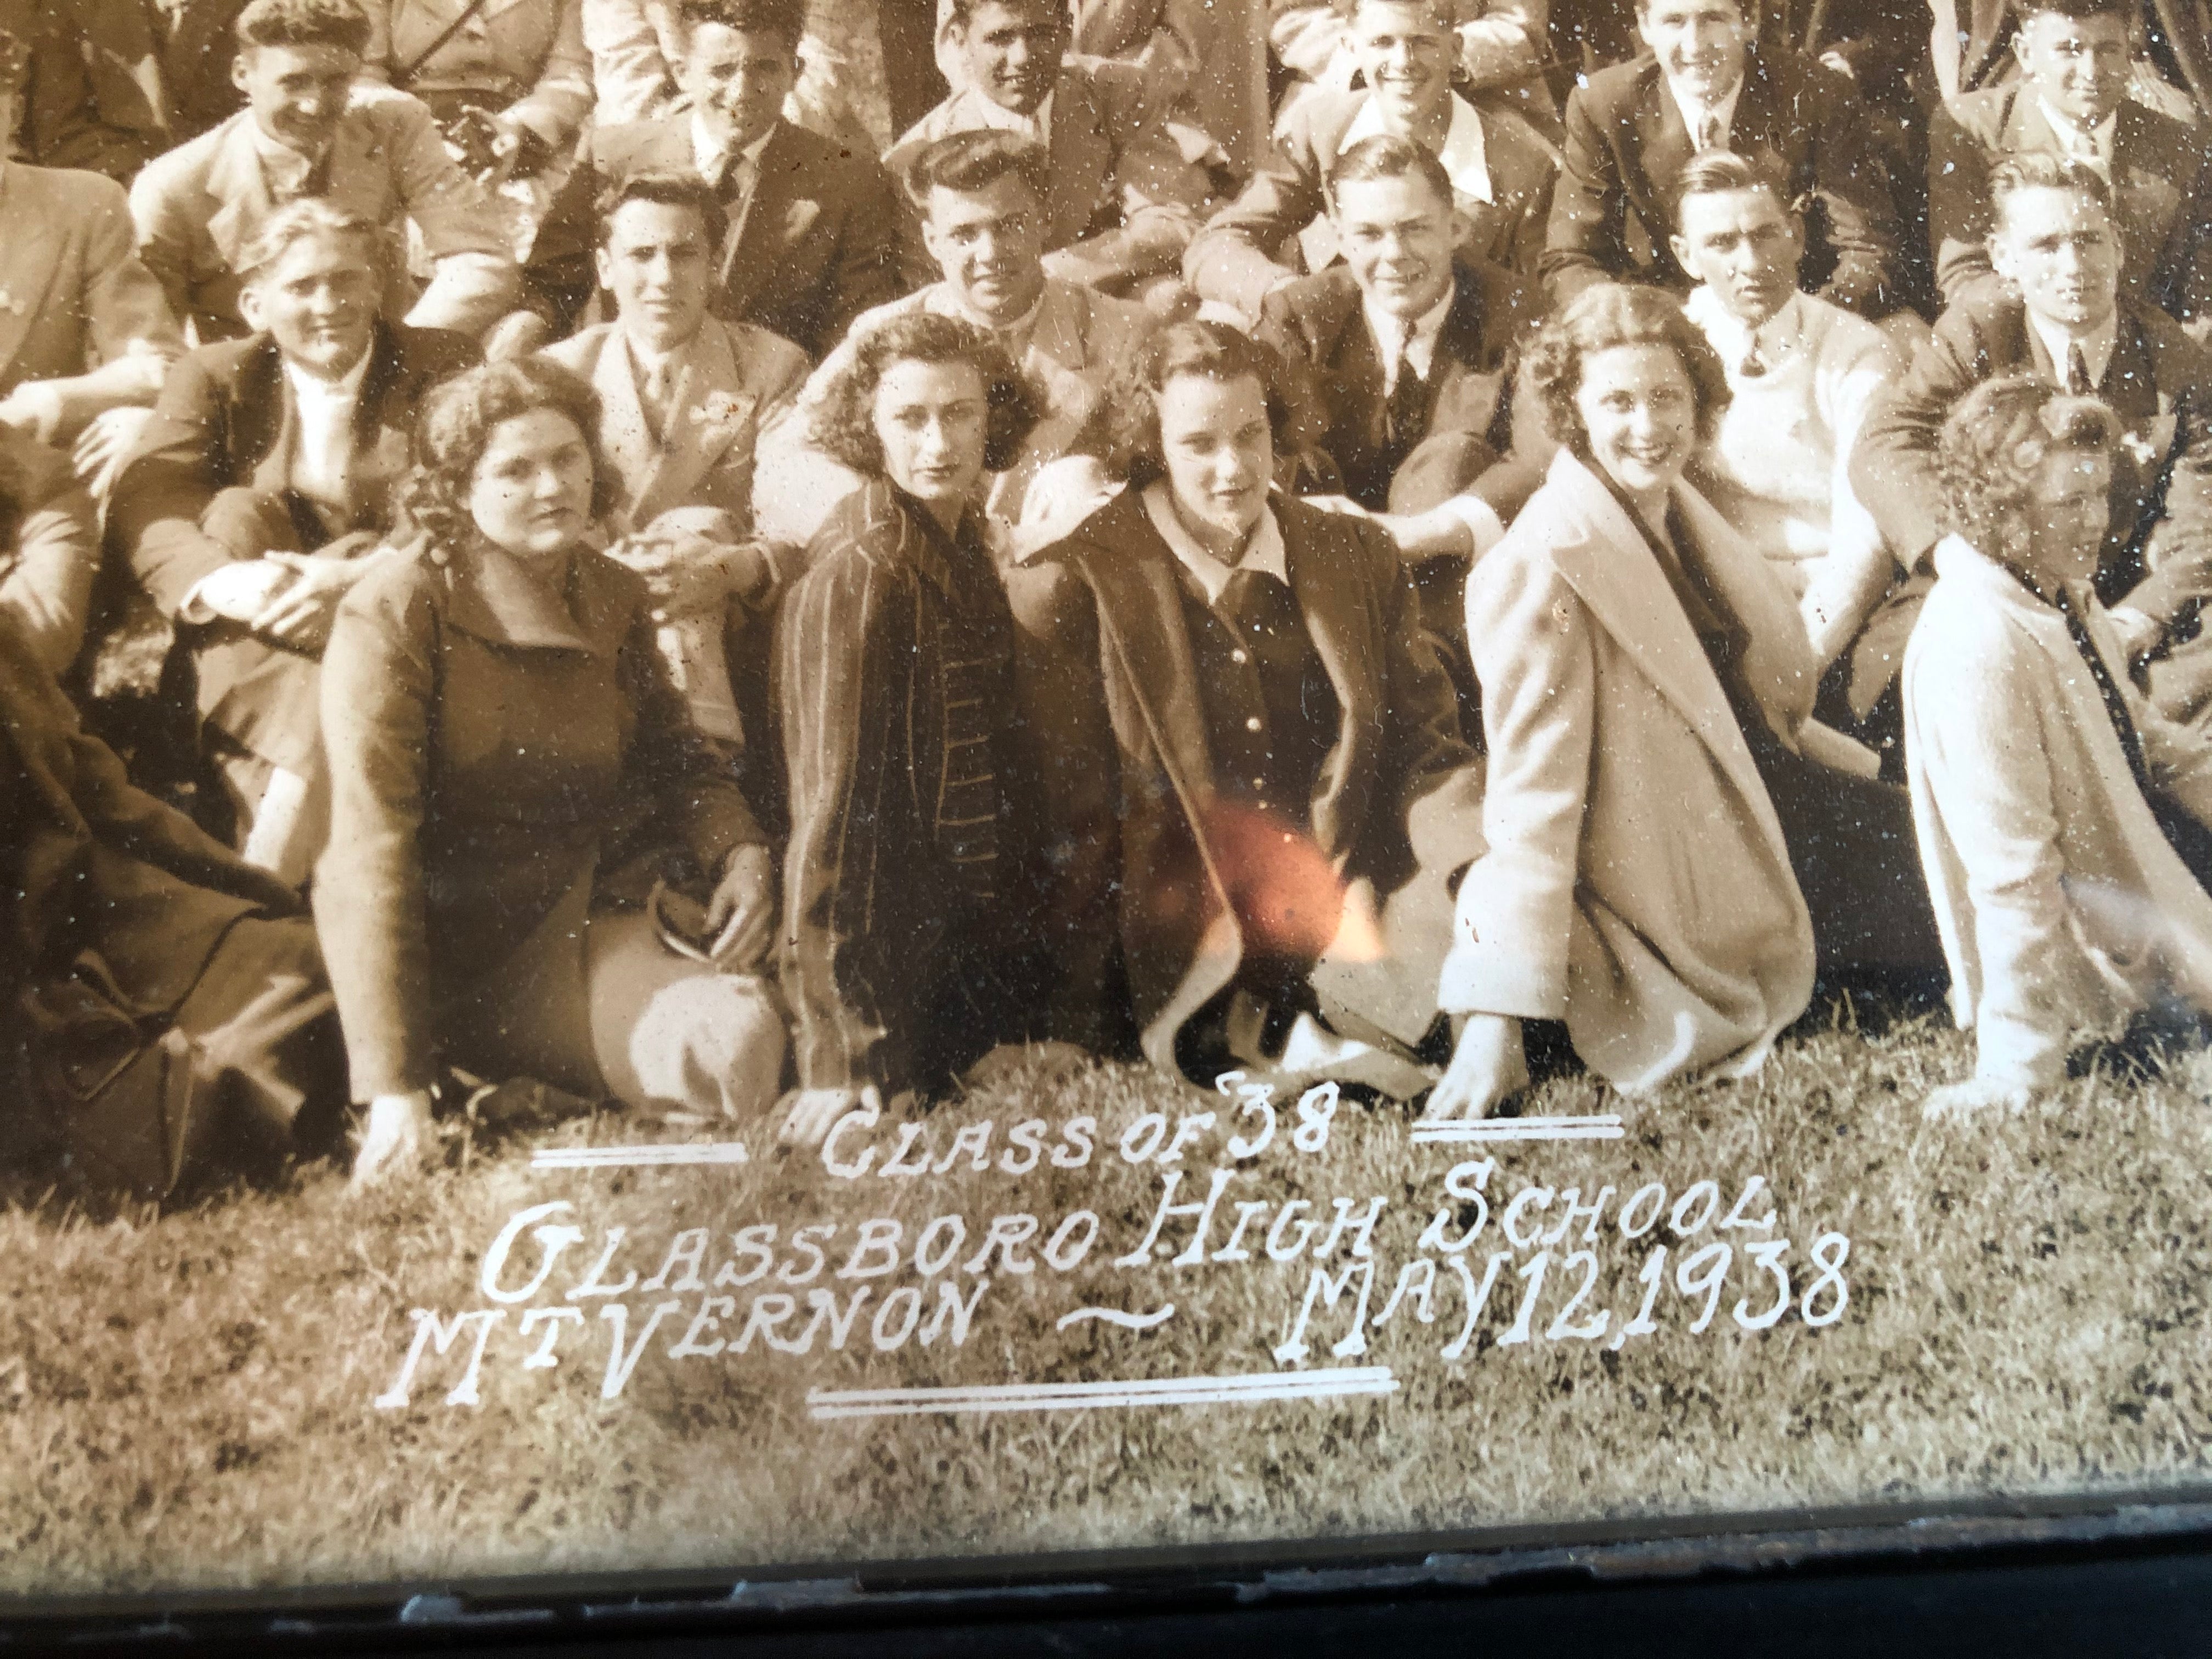 Class of 1938 Glassboro High School Class photo